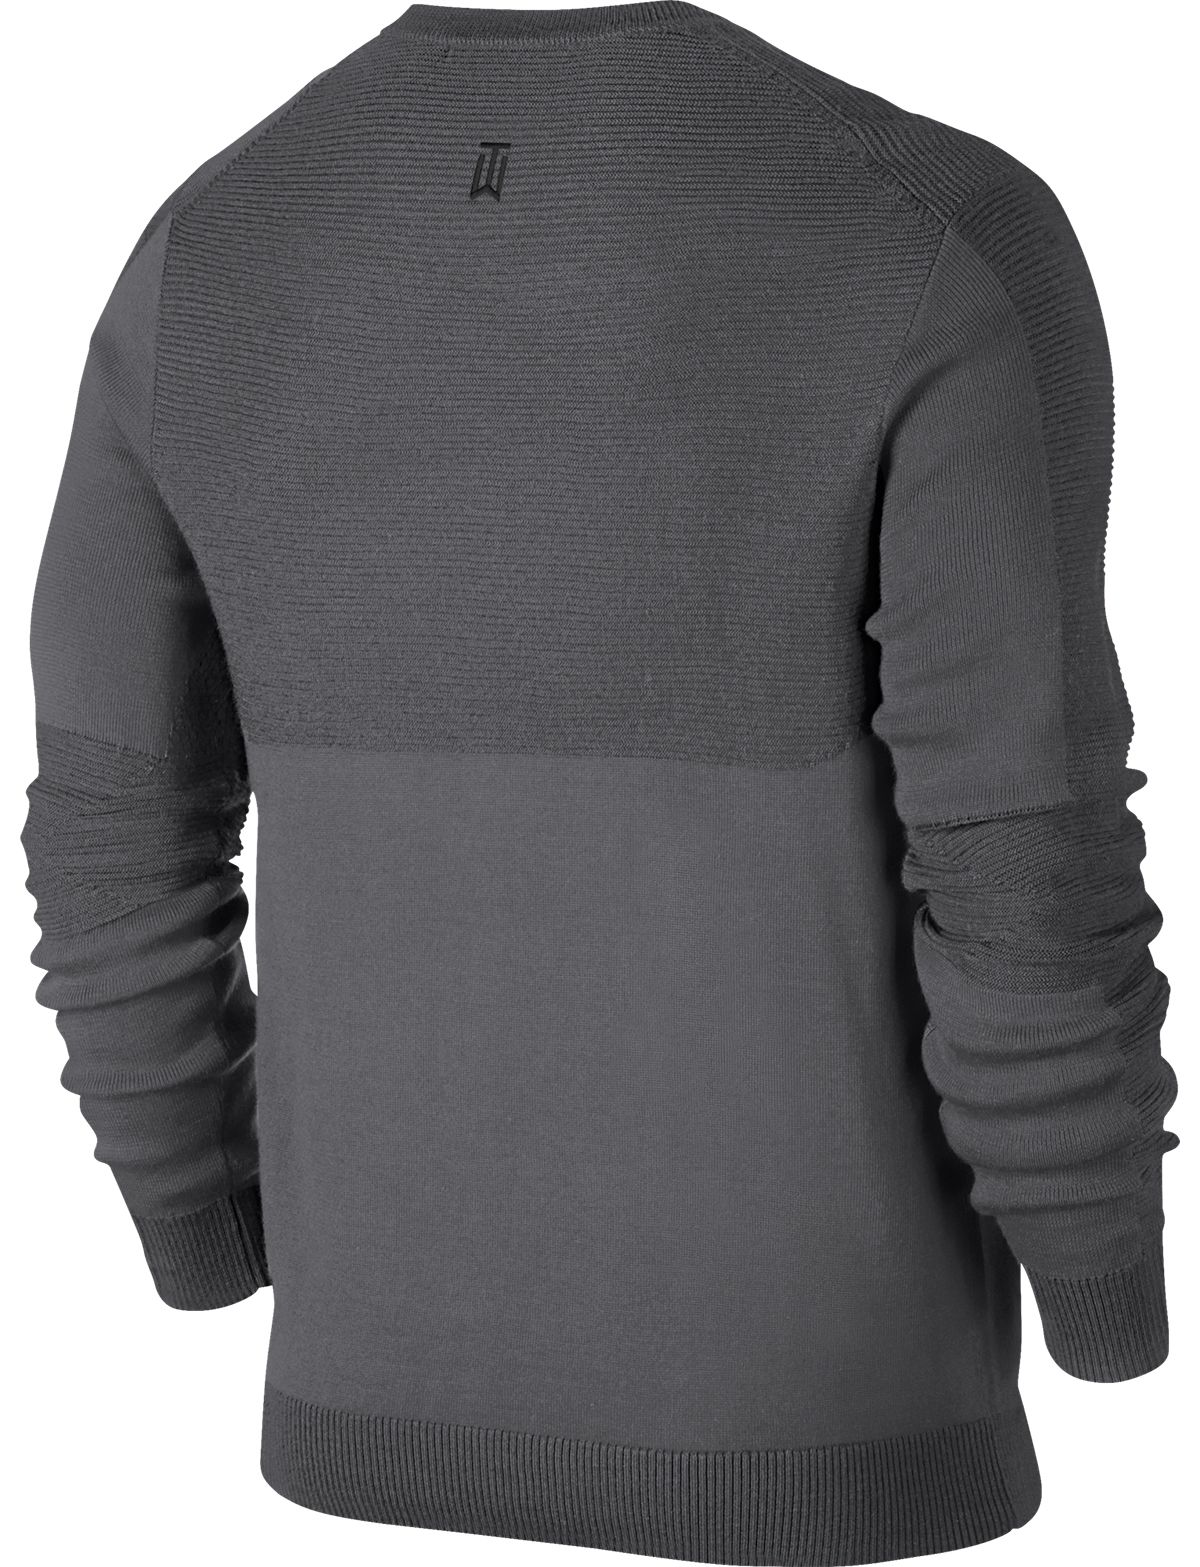 Nike TW Engineered Sweater 620148 